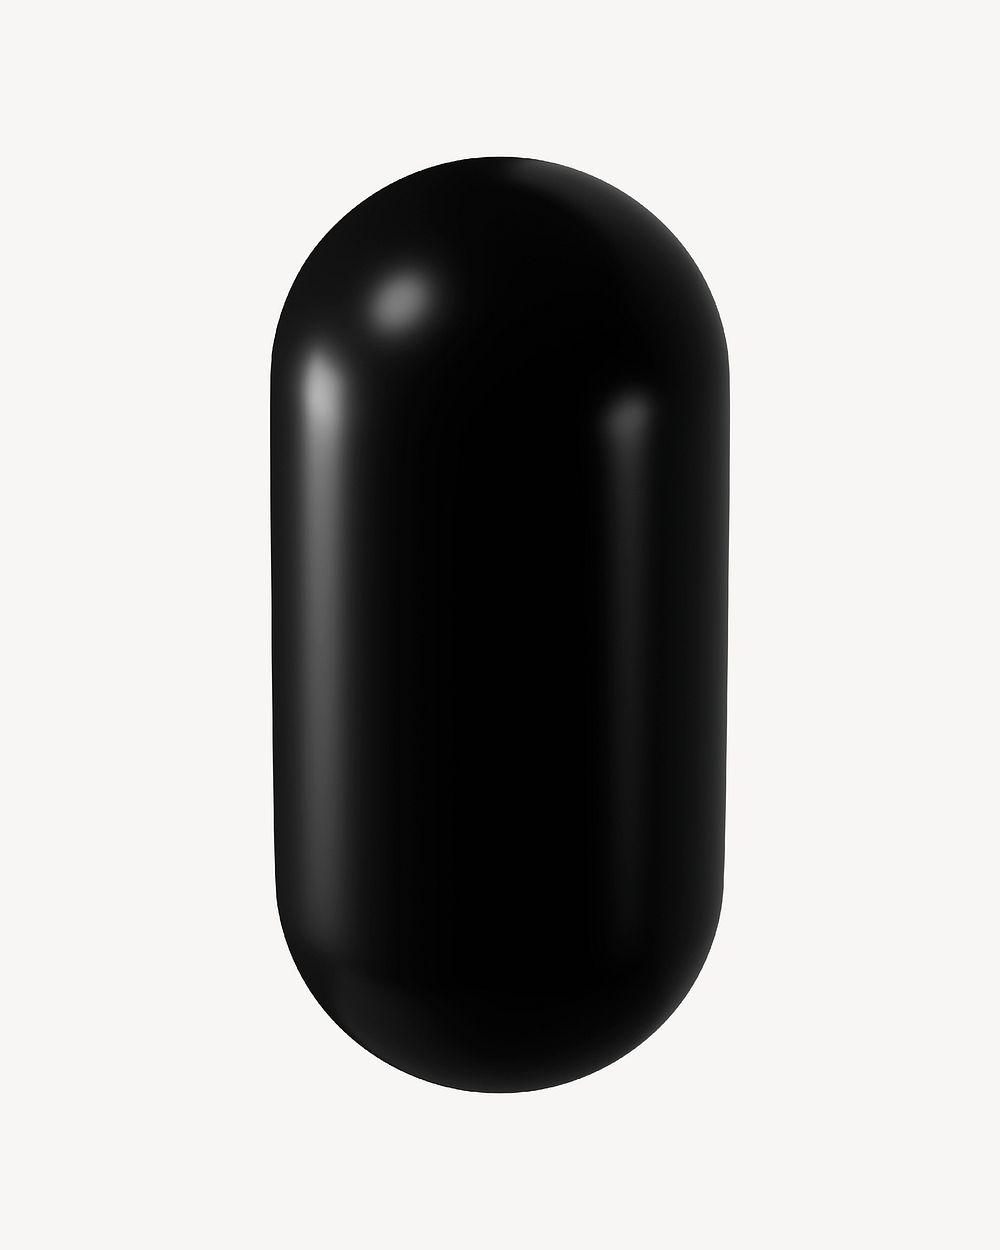 3D black capsule shape, geometric clipart psd